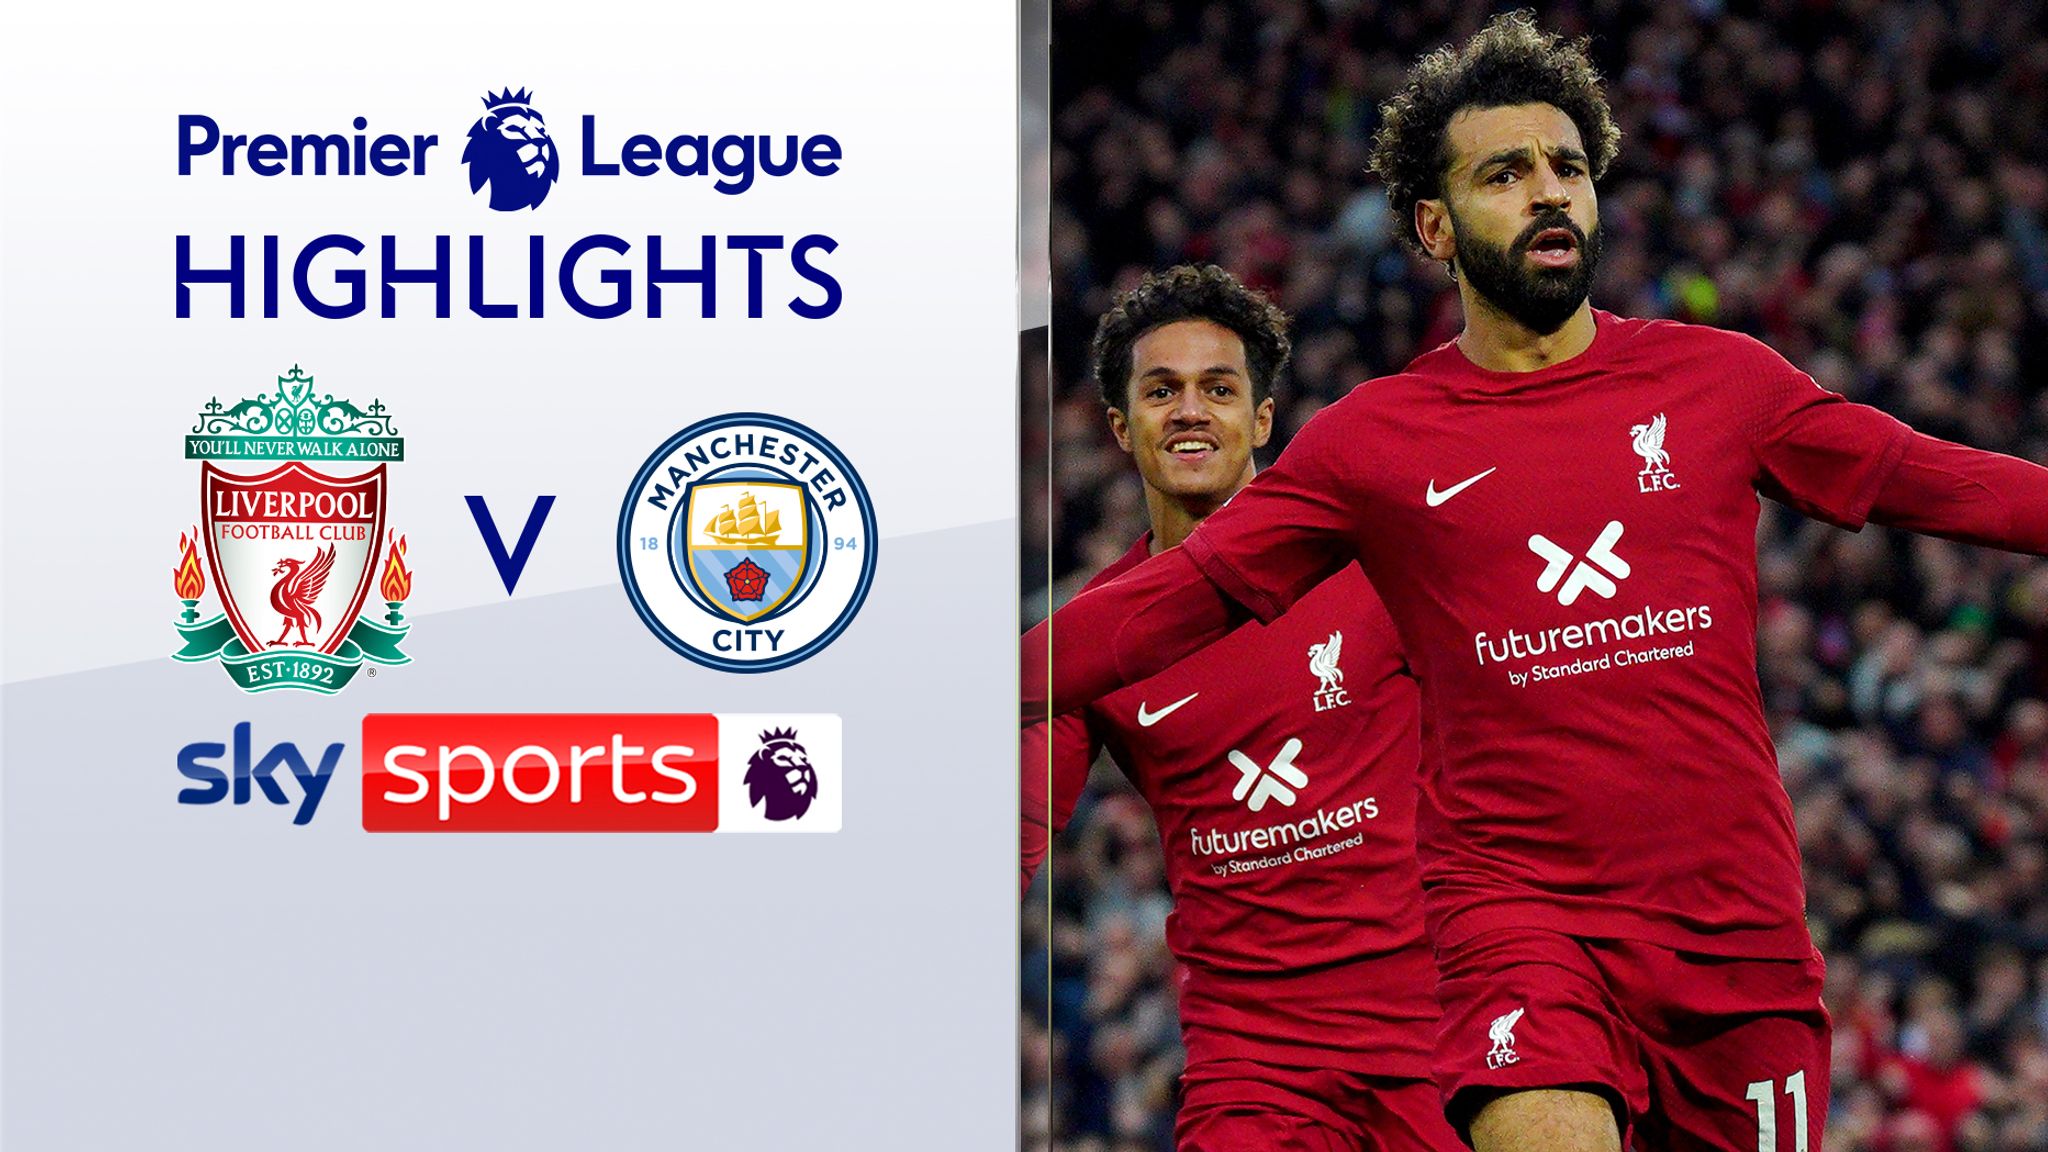 Liverpool 1-0 Manchester City Premier League highlights Video Watch TV Show Sky Sports